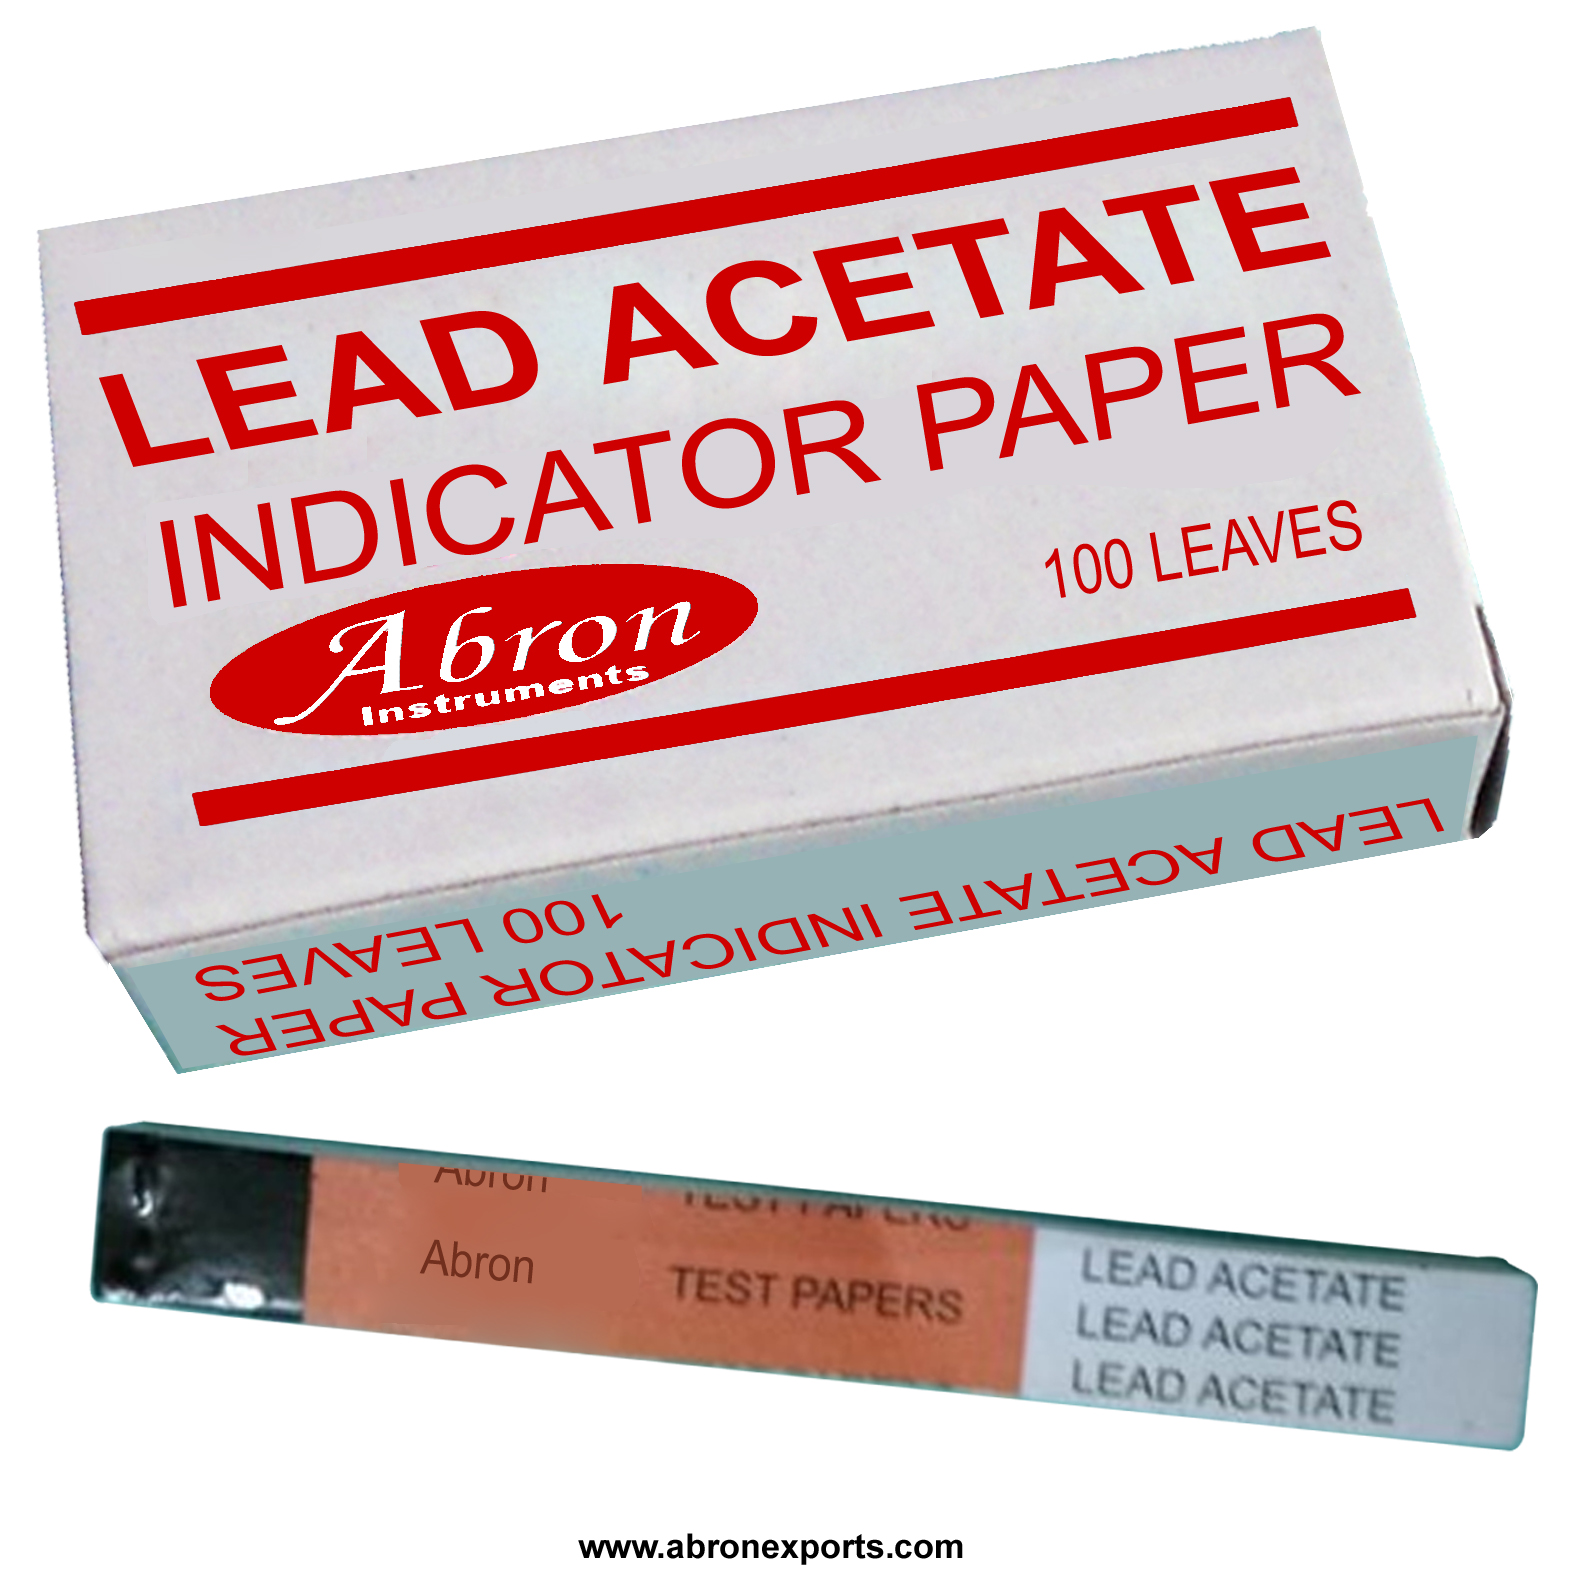 Lead acetate indicator paper LR 100 lvs abron IP-1130